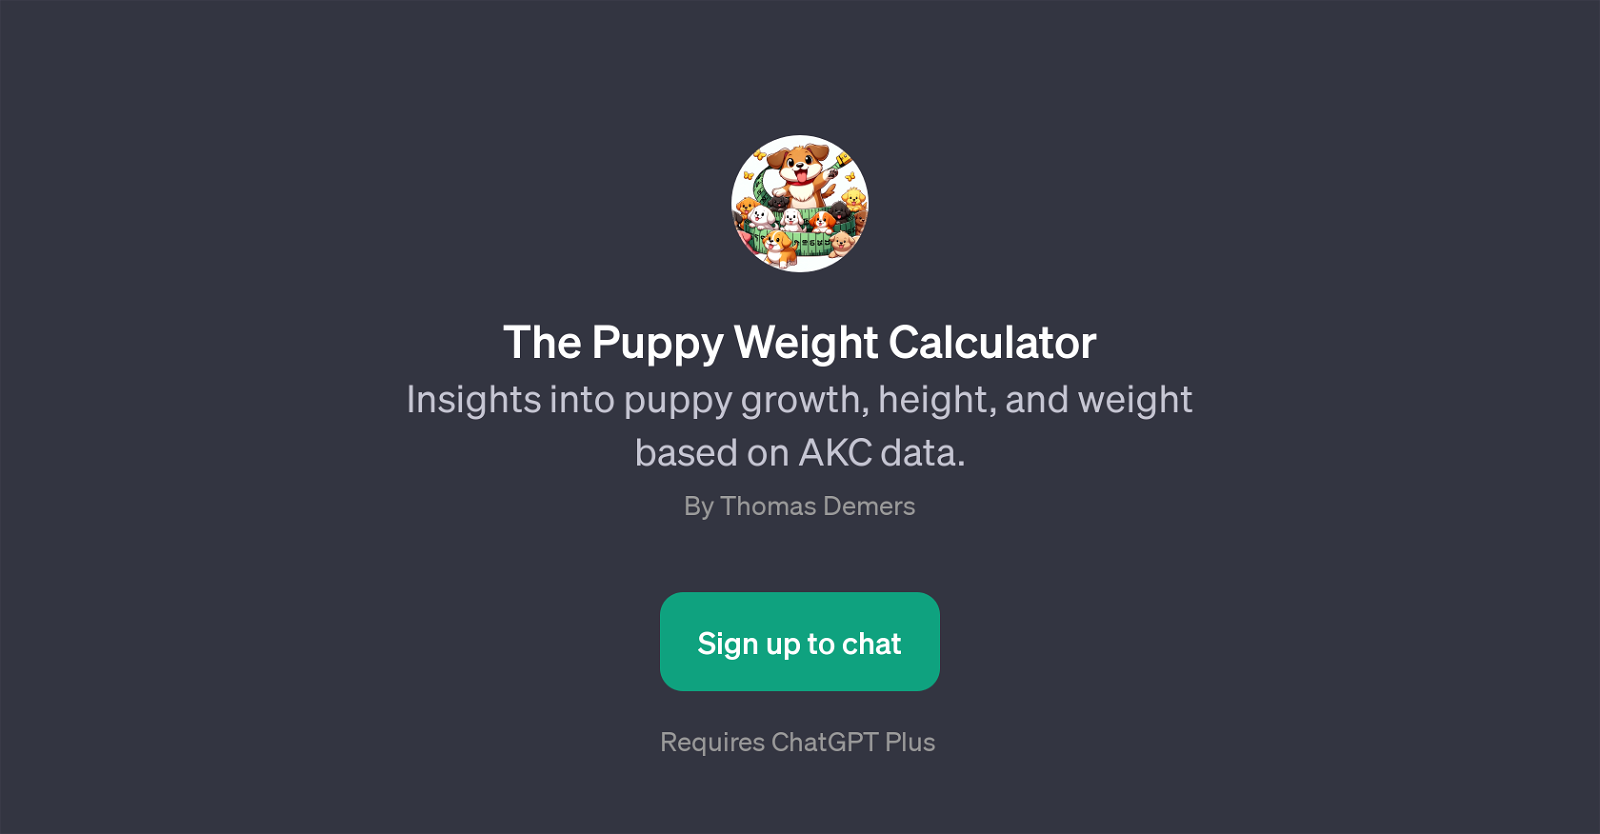 The Puppy Weight Calculator website